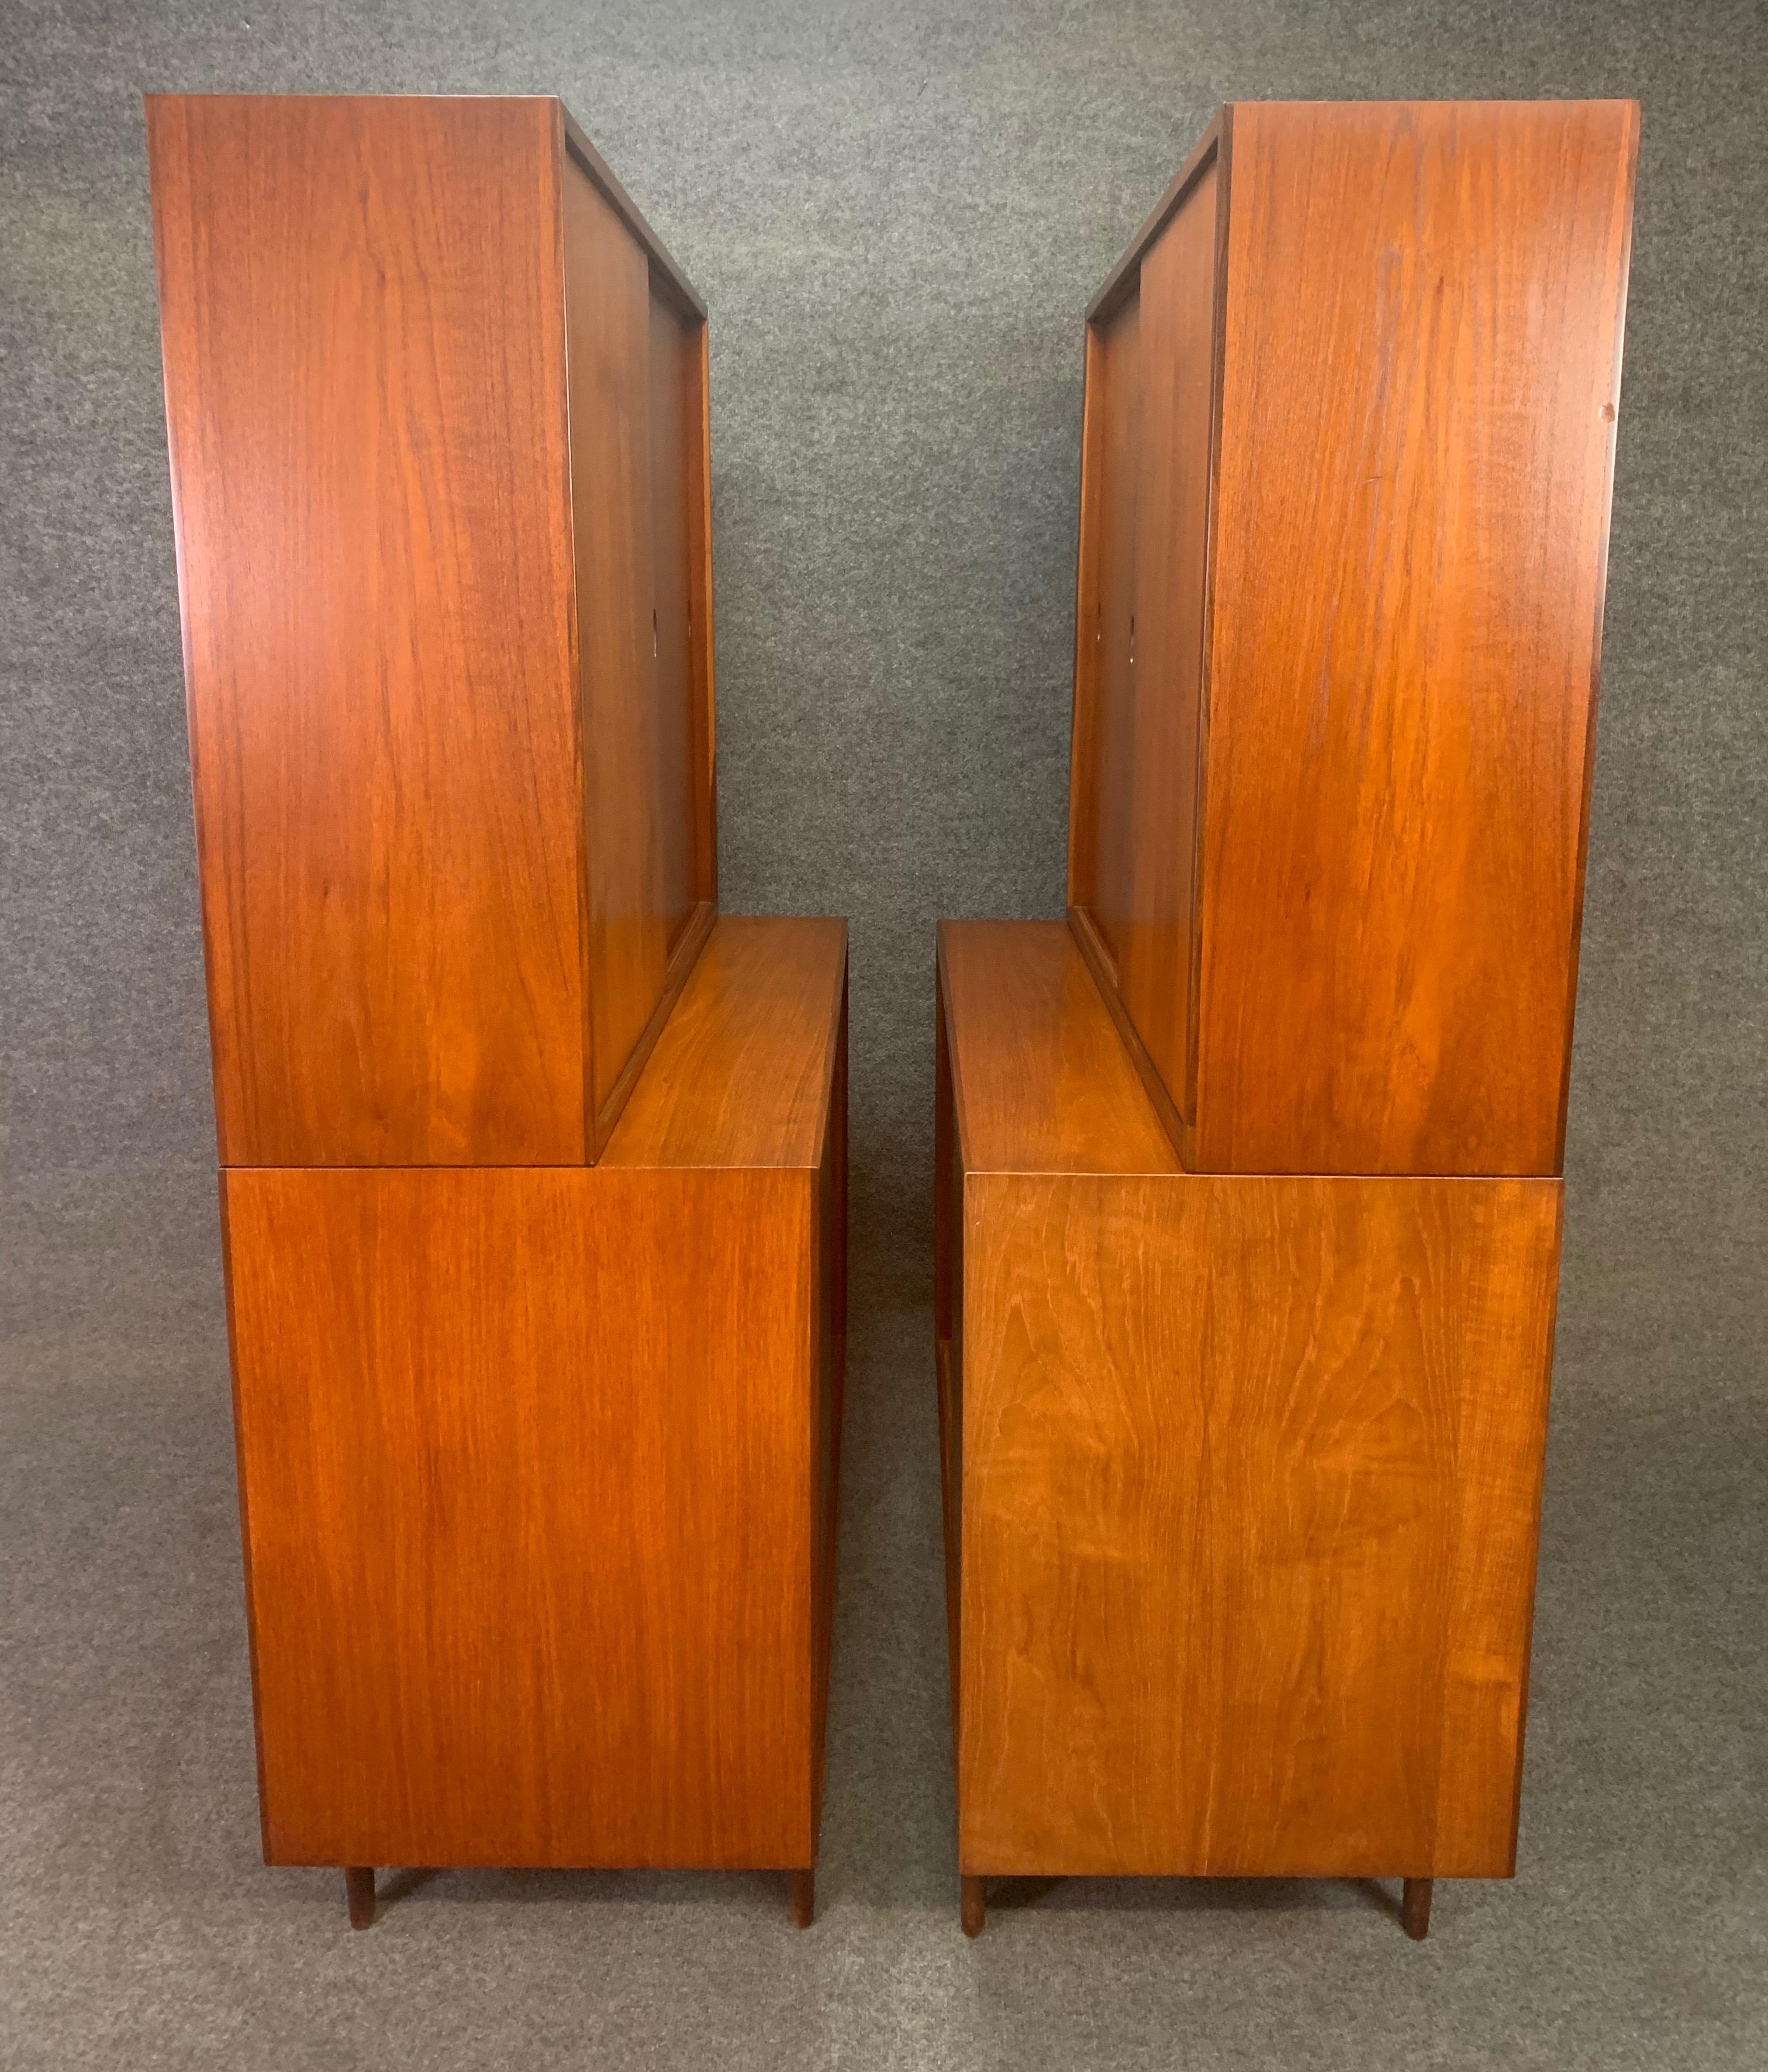 Pair of Vintage Danish Mid-Century Modern Teak Cupboard Cabinets by Kofod Larsen 4